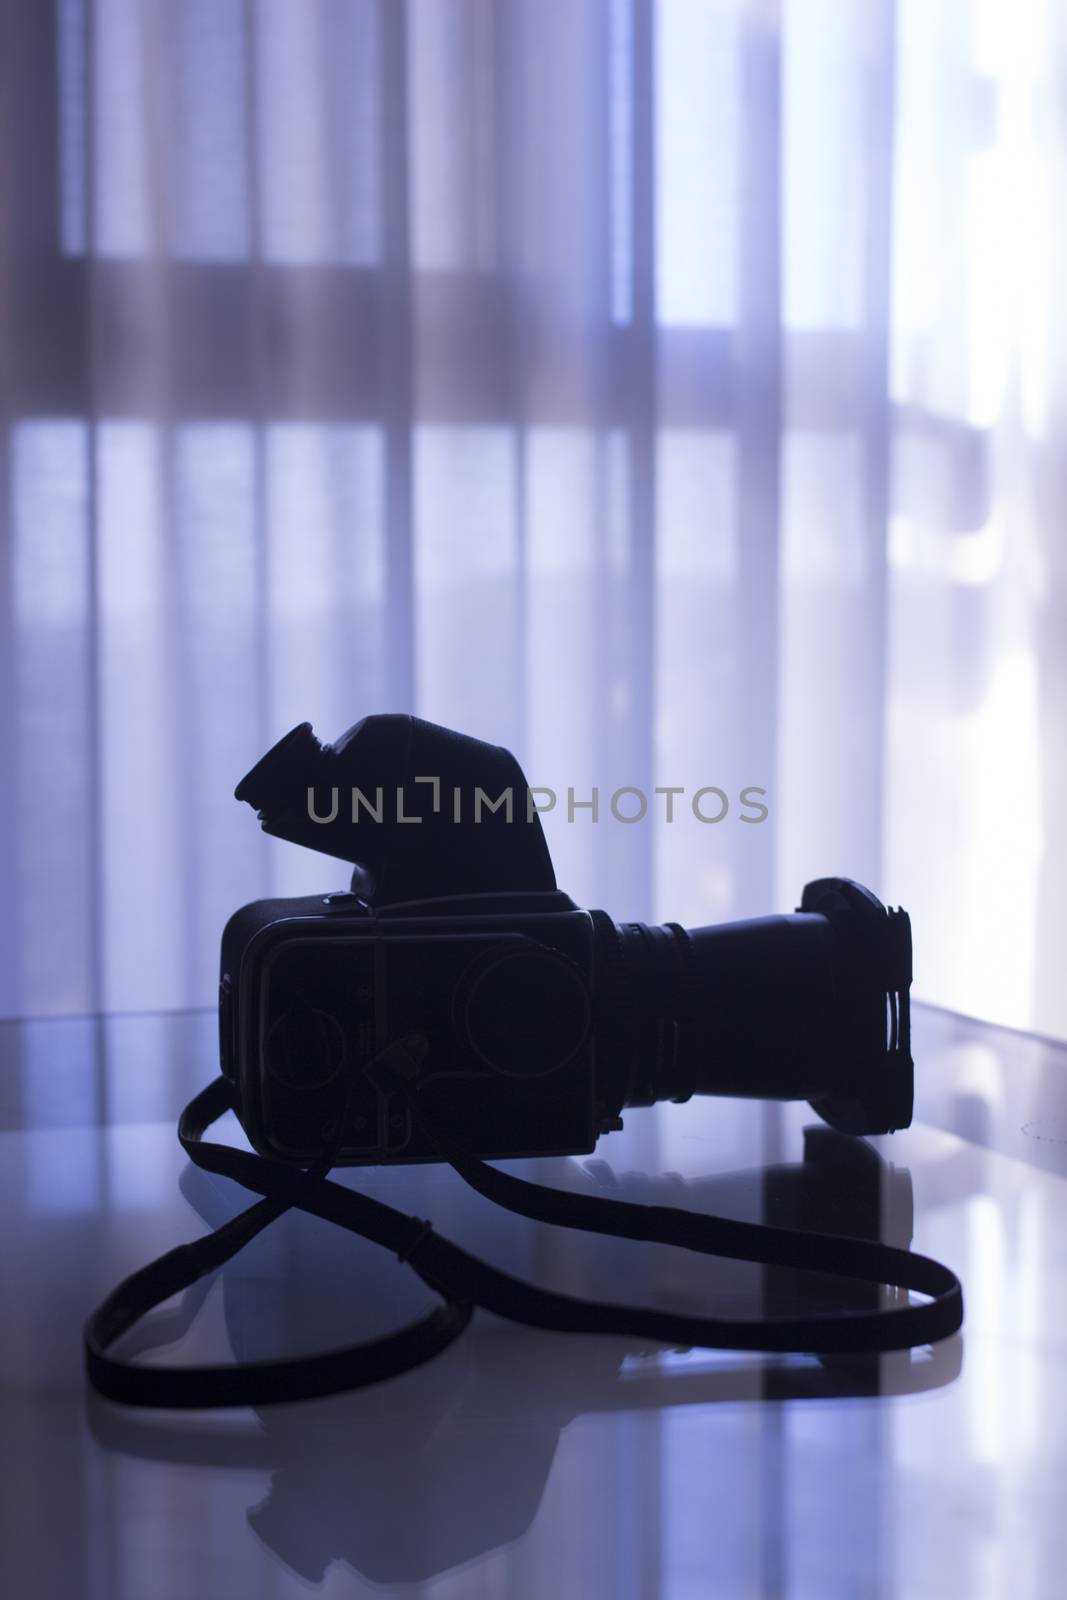 Medium format analog film camera silhouette by edwardolive